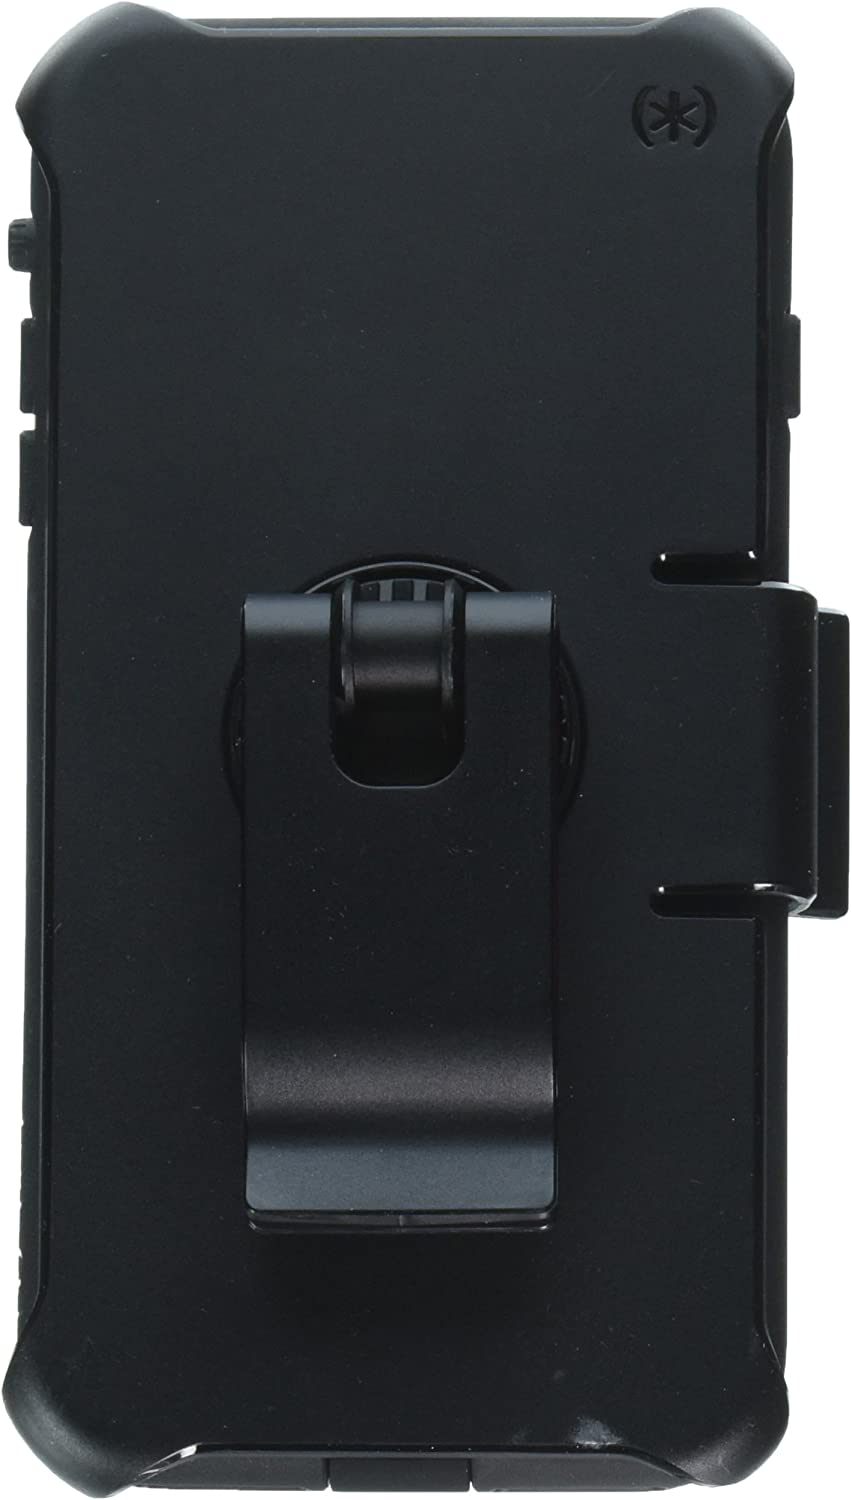 Speck Presidio Ultra Case for iPhone 8/7, Black